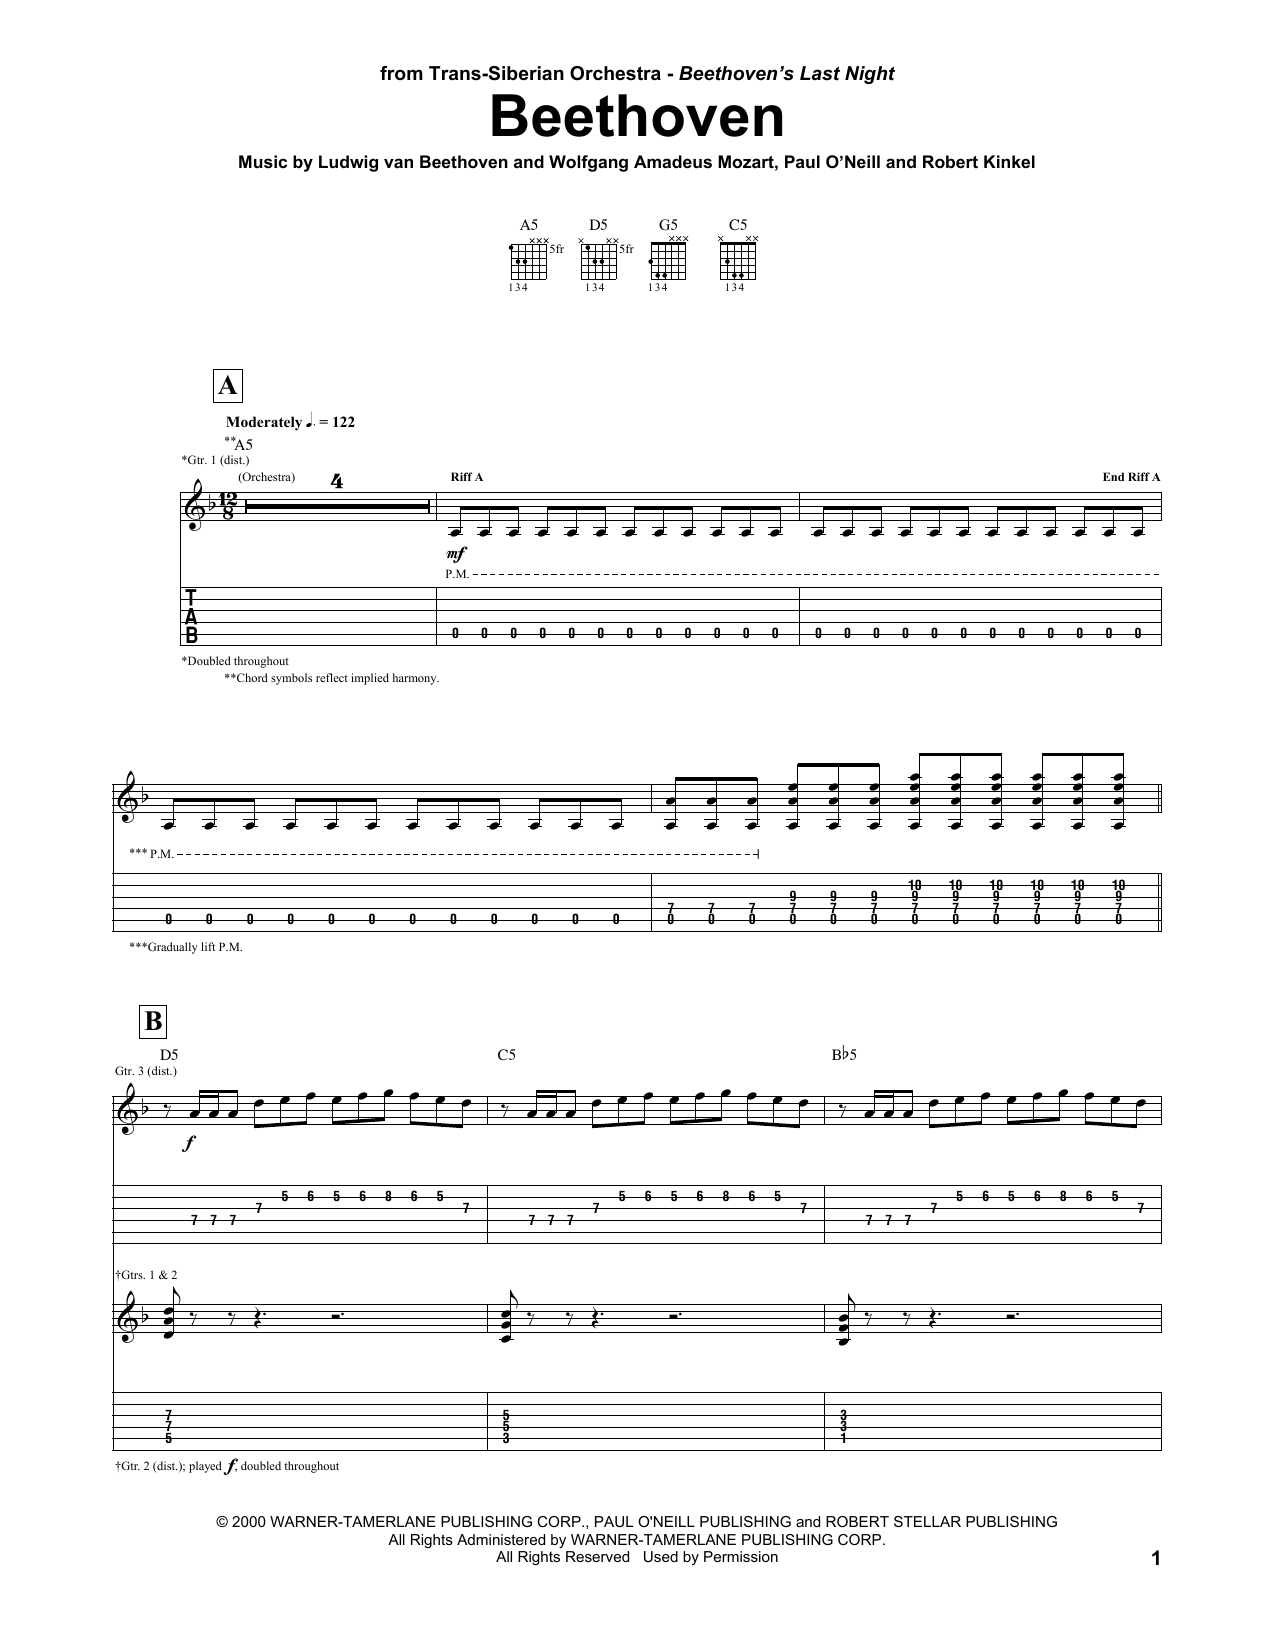 Trans-Siberian Orchestra Beethoven Sheet Music Notes & Chords for Guitar Tab Play-Along - Download or Print PDF